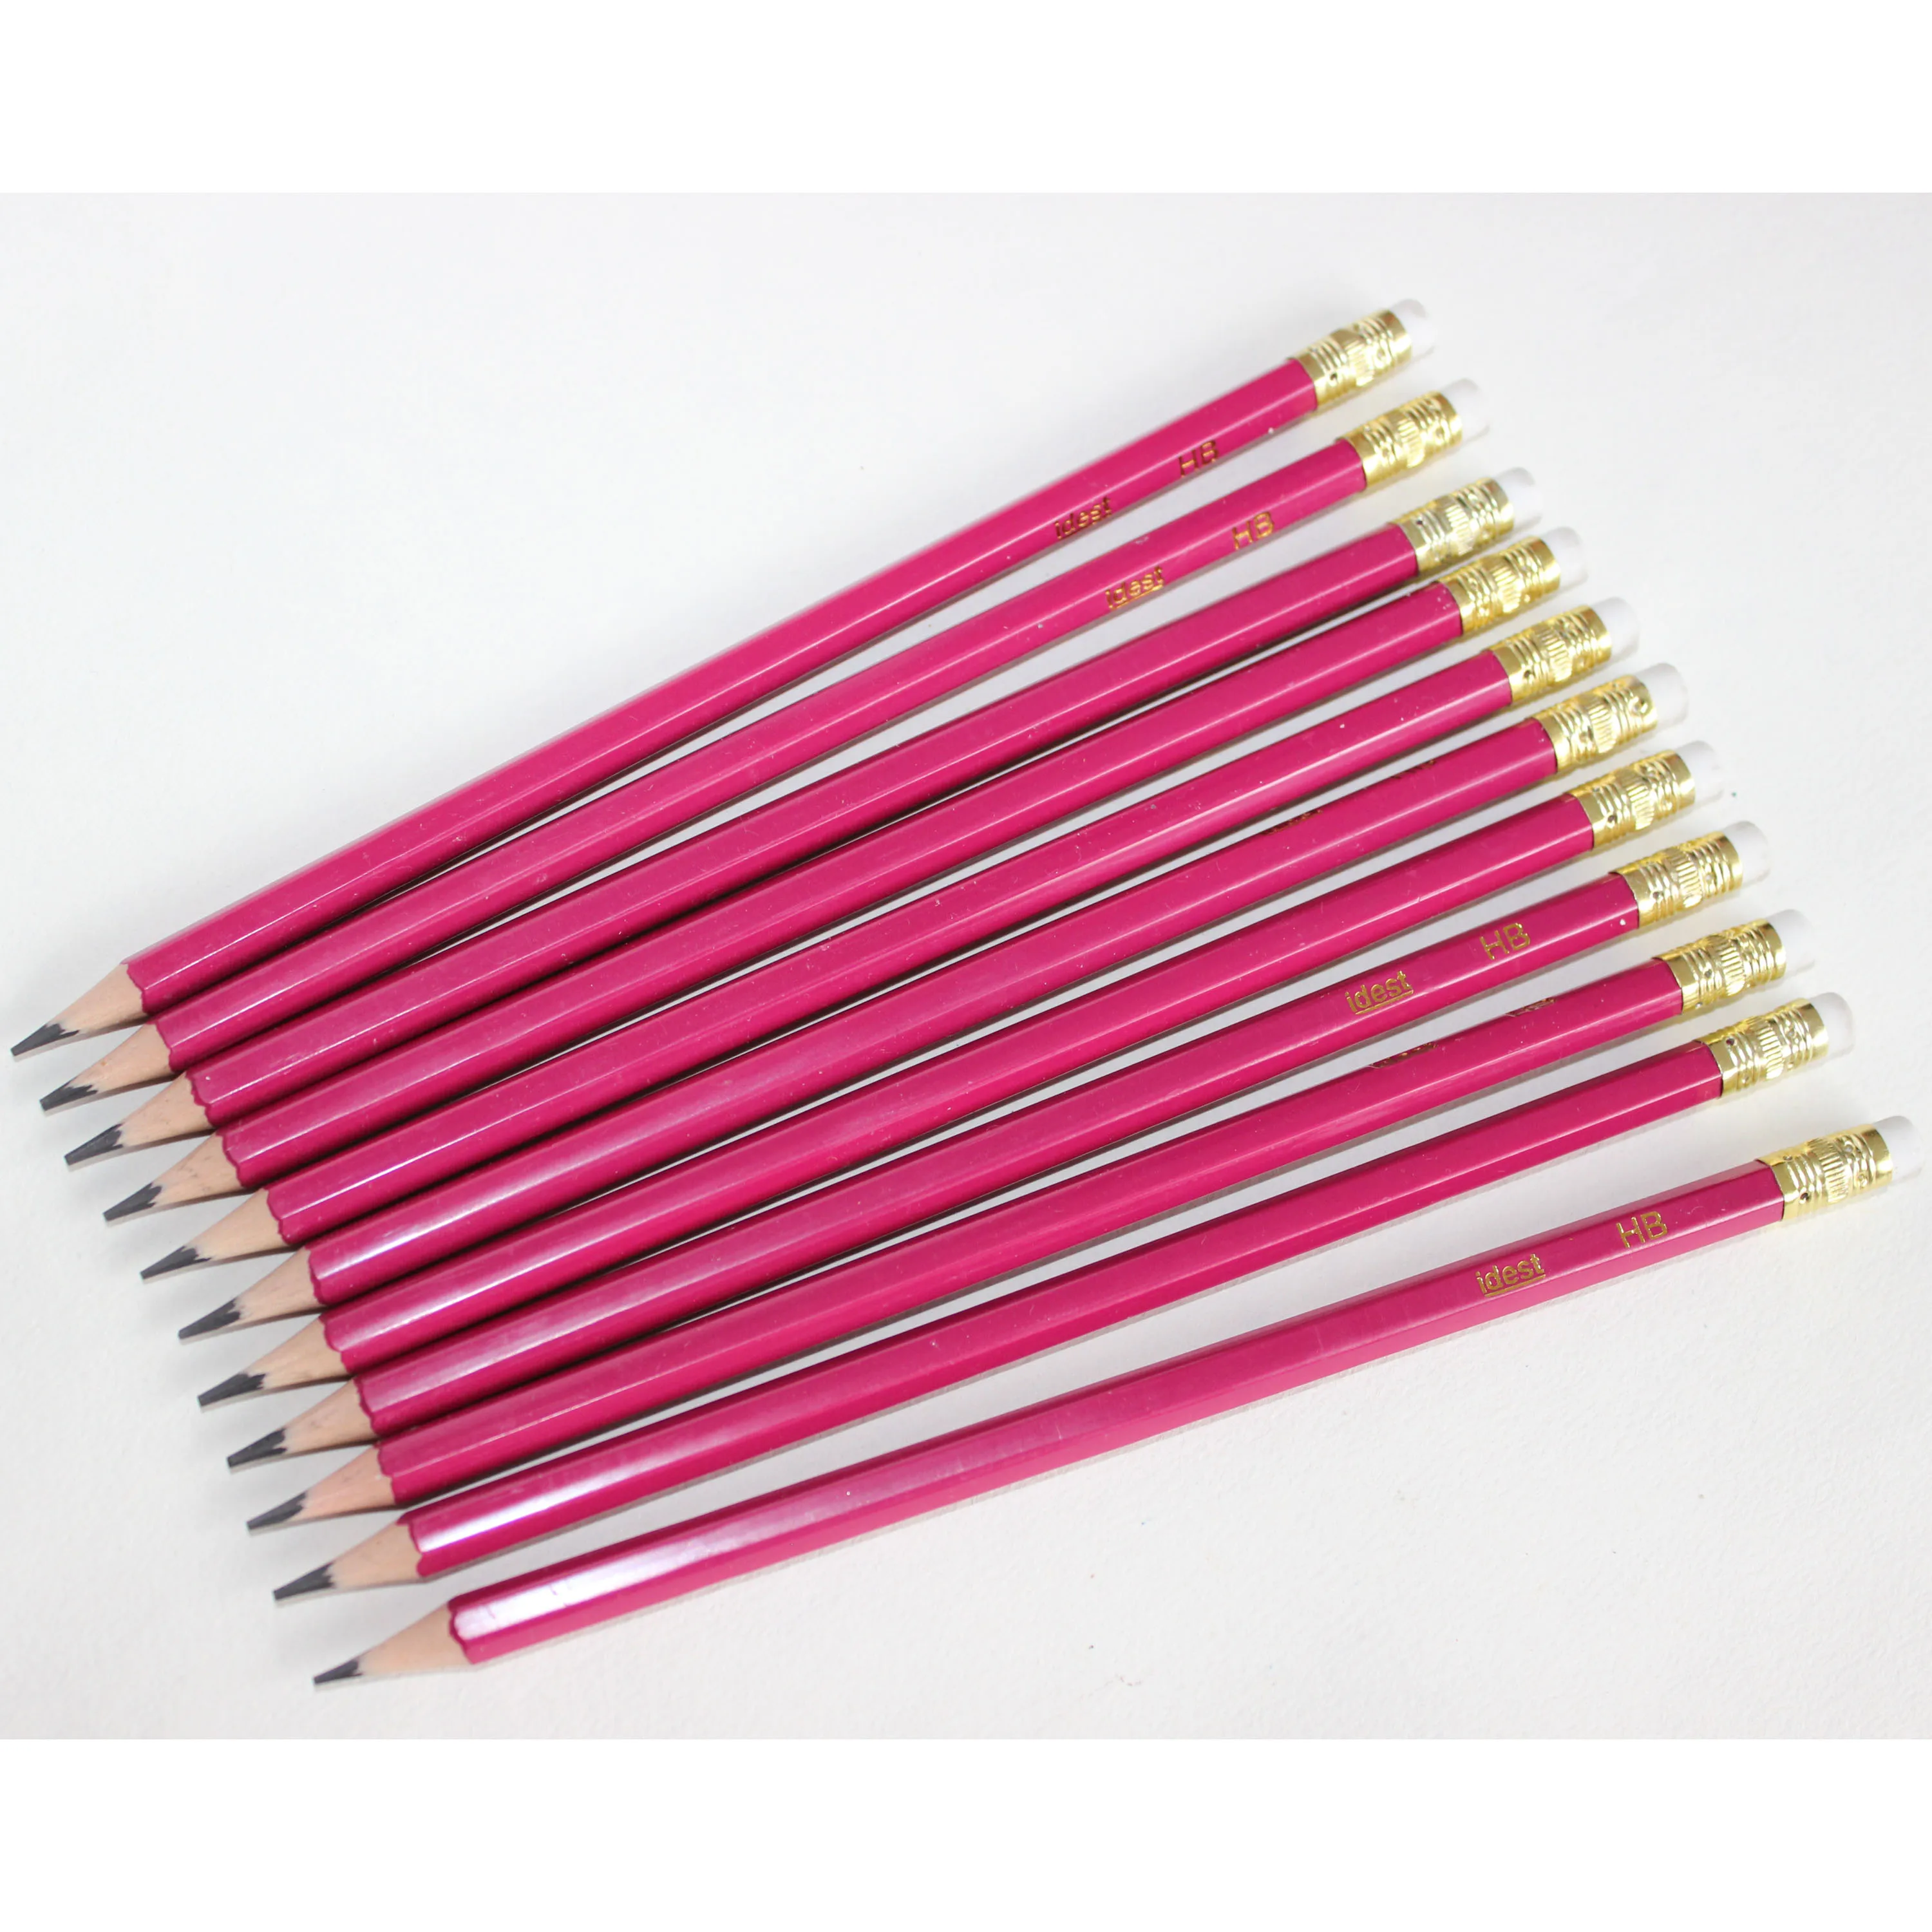 12pcs Magic Bendy Flexible Soft Pencil with Eraser Colorful Cute Student School